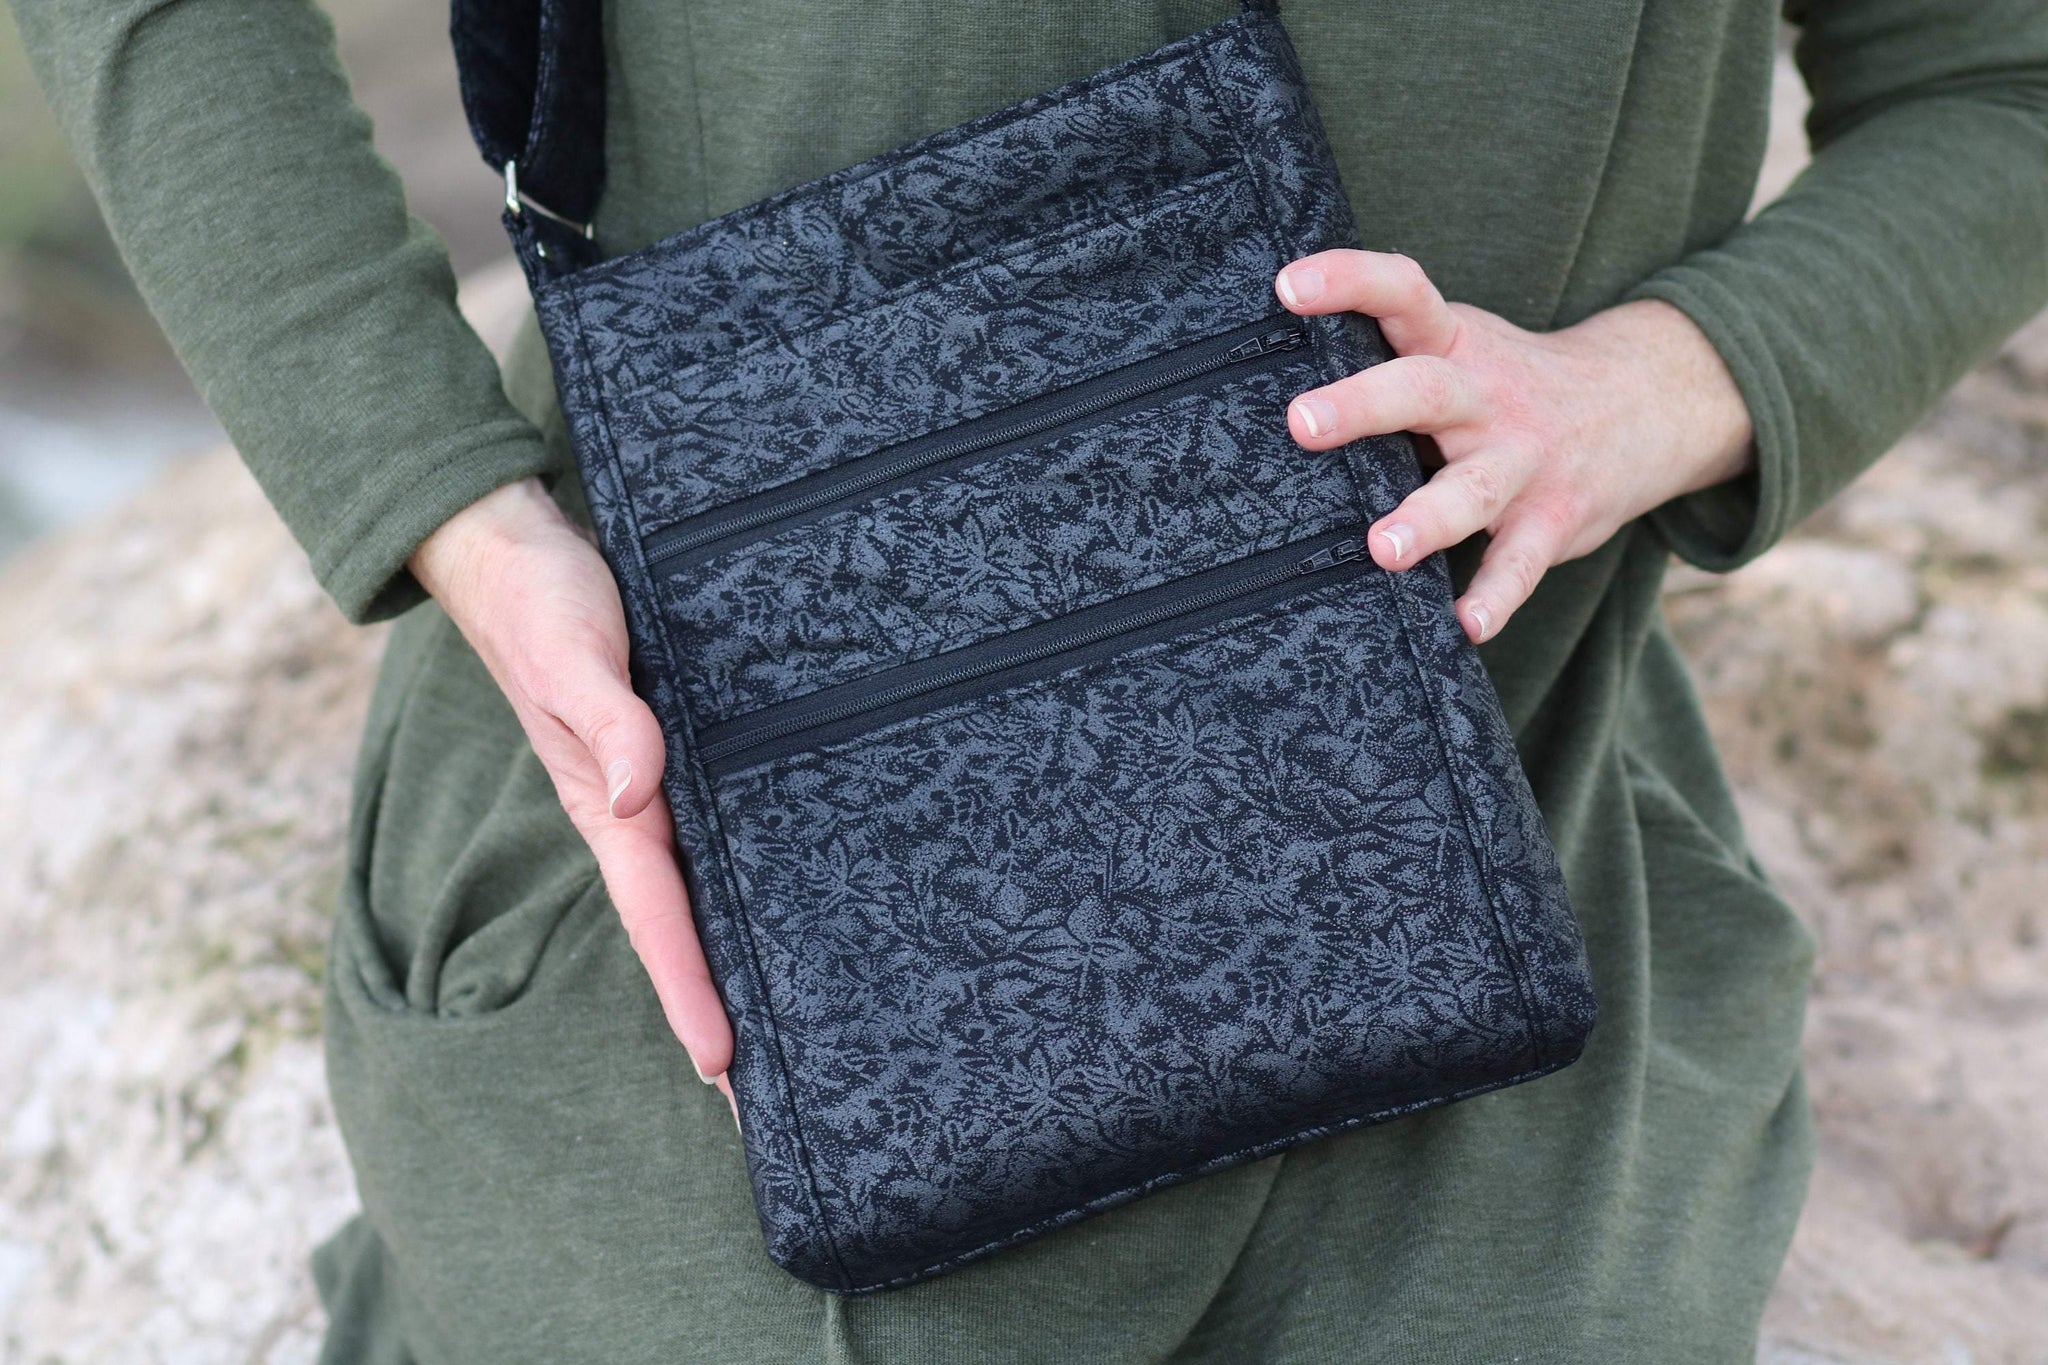 Express Black Fabric Mini Shoulder Bag Purse w/ Buckle Strap | eBay